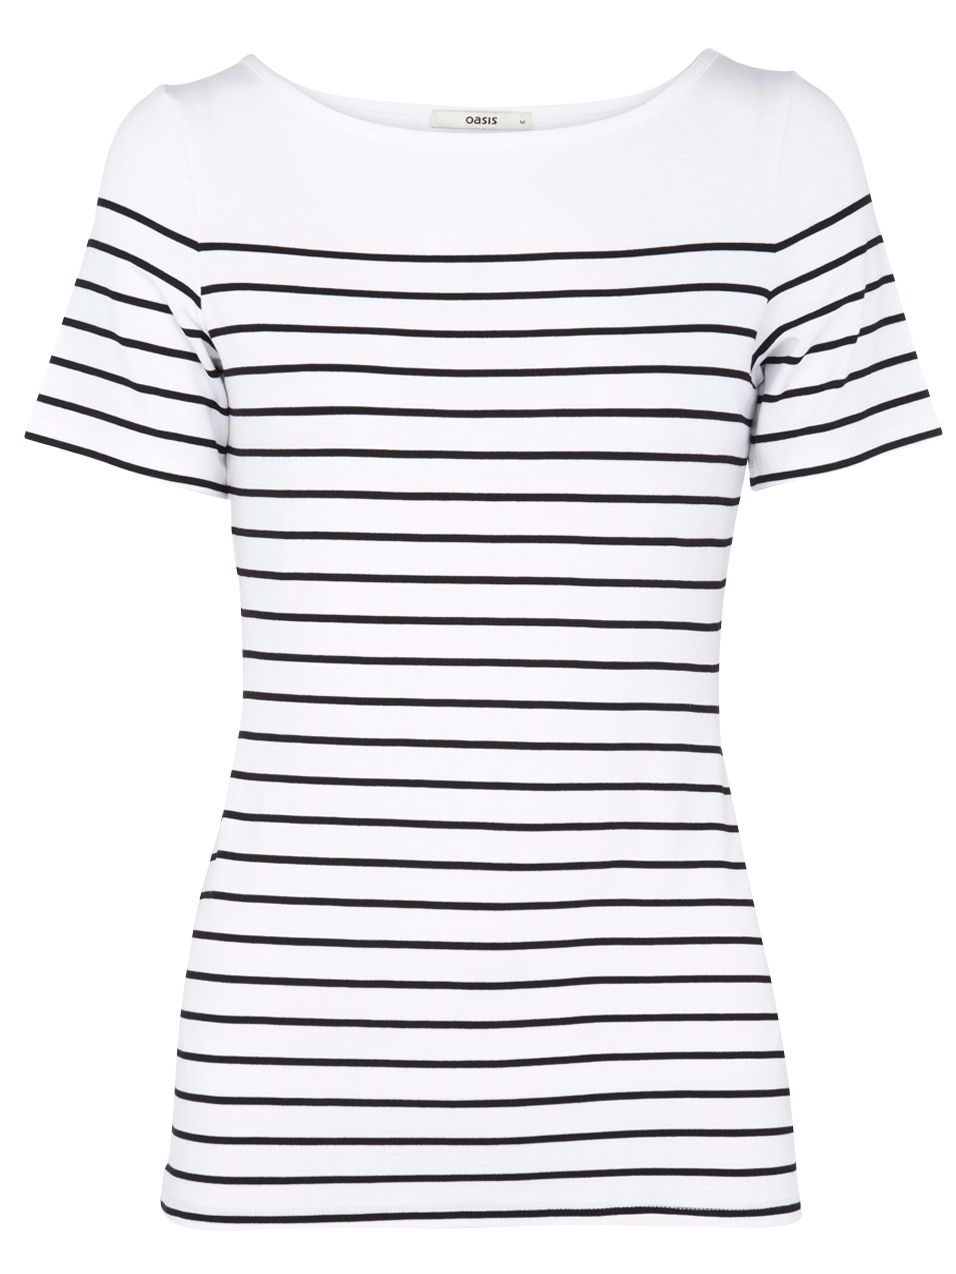 Breton Stripe Short Sleeve T-Shirt,